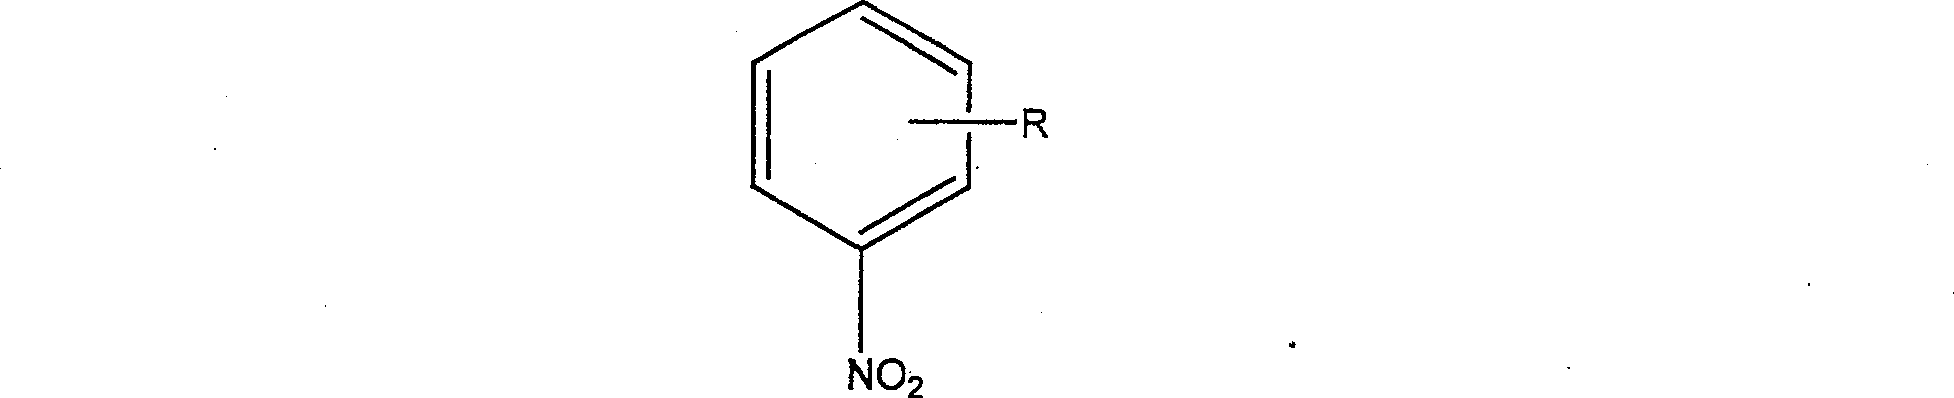 Degradation of nitrobenzol fomite with catalytic wetting shared oxidative method